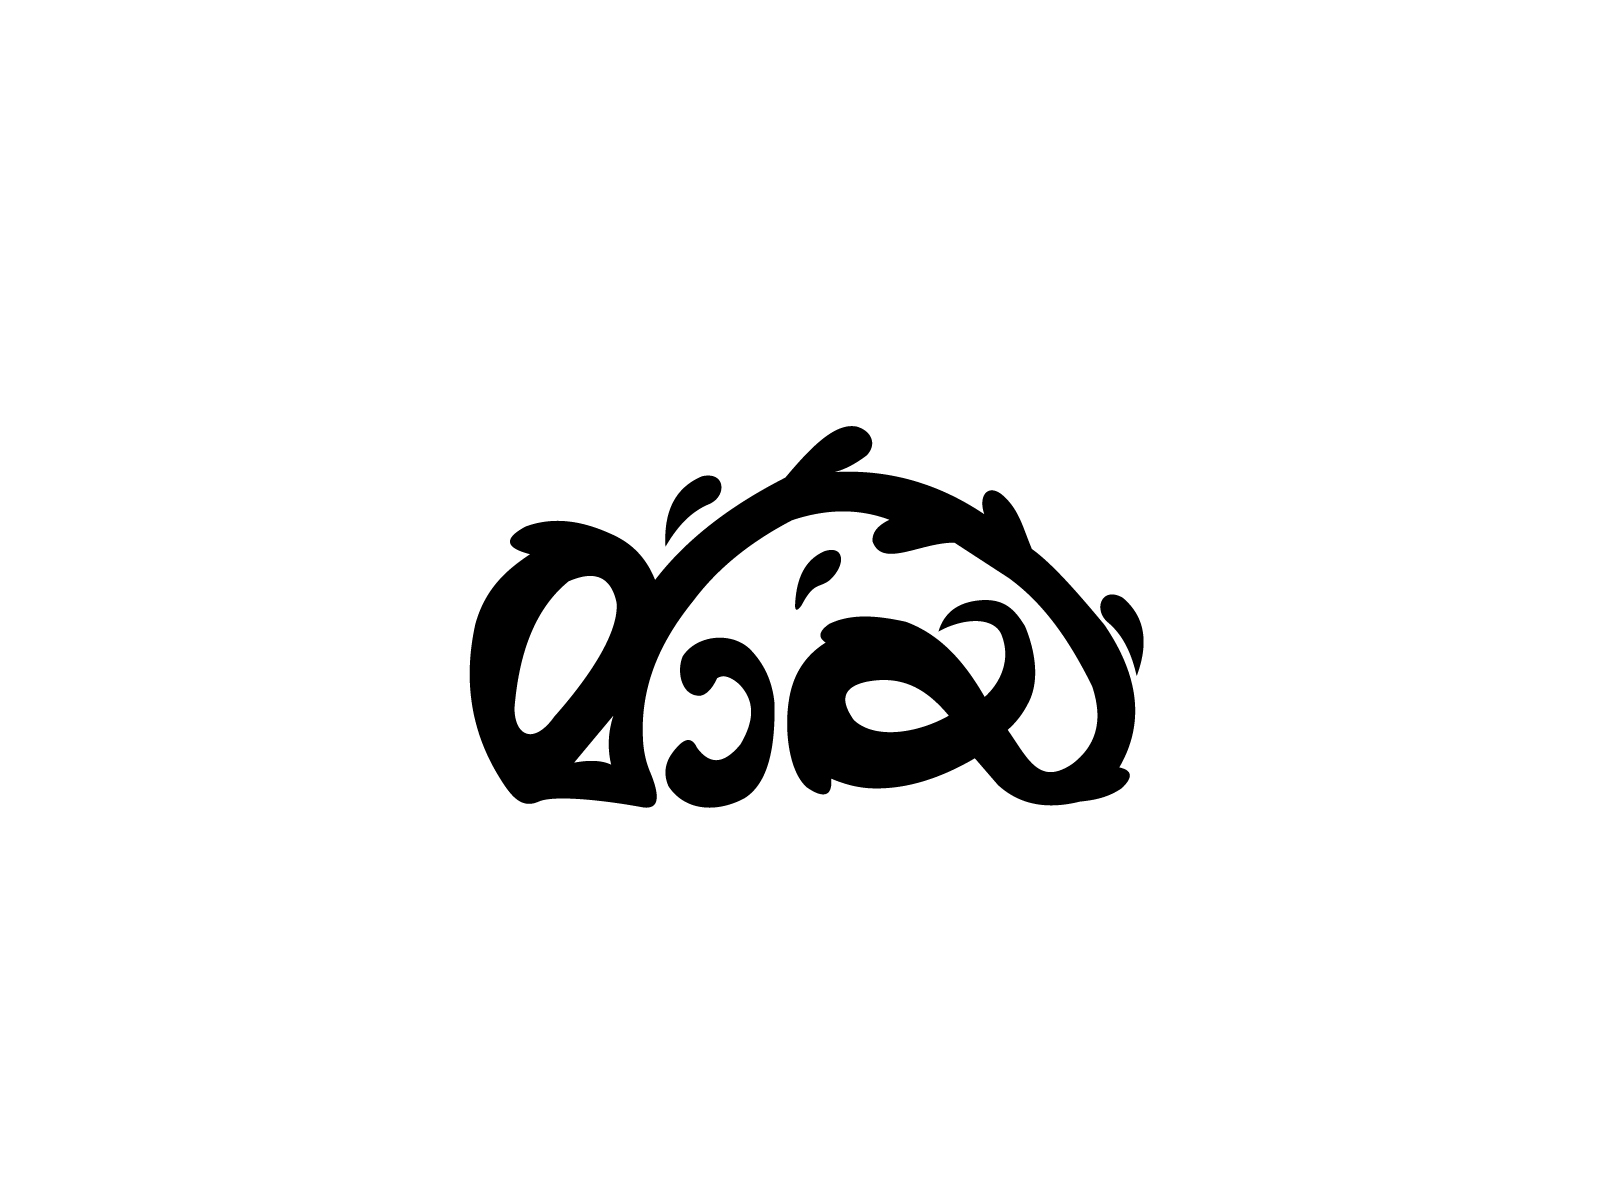 malayalam typography logo by adarsh thambi on Dribbble